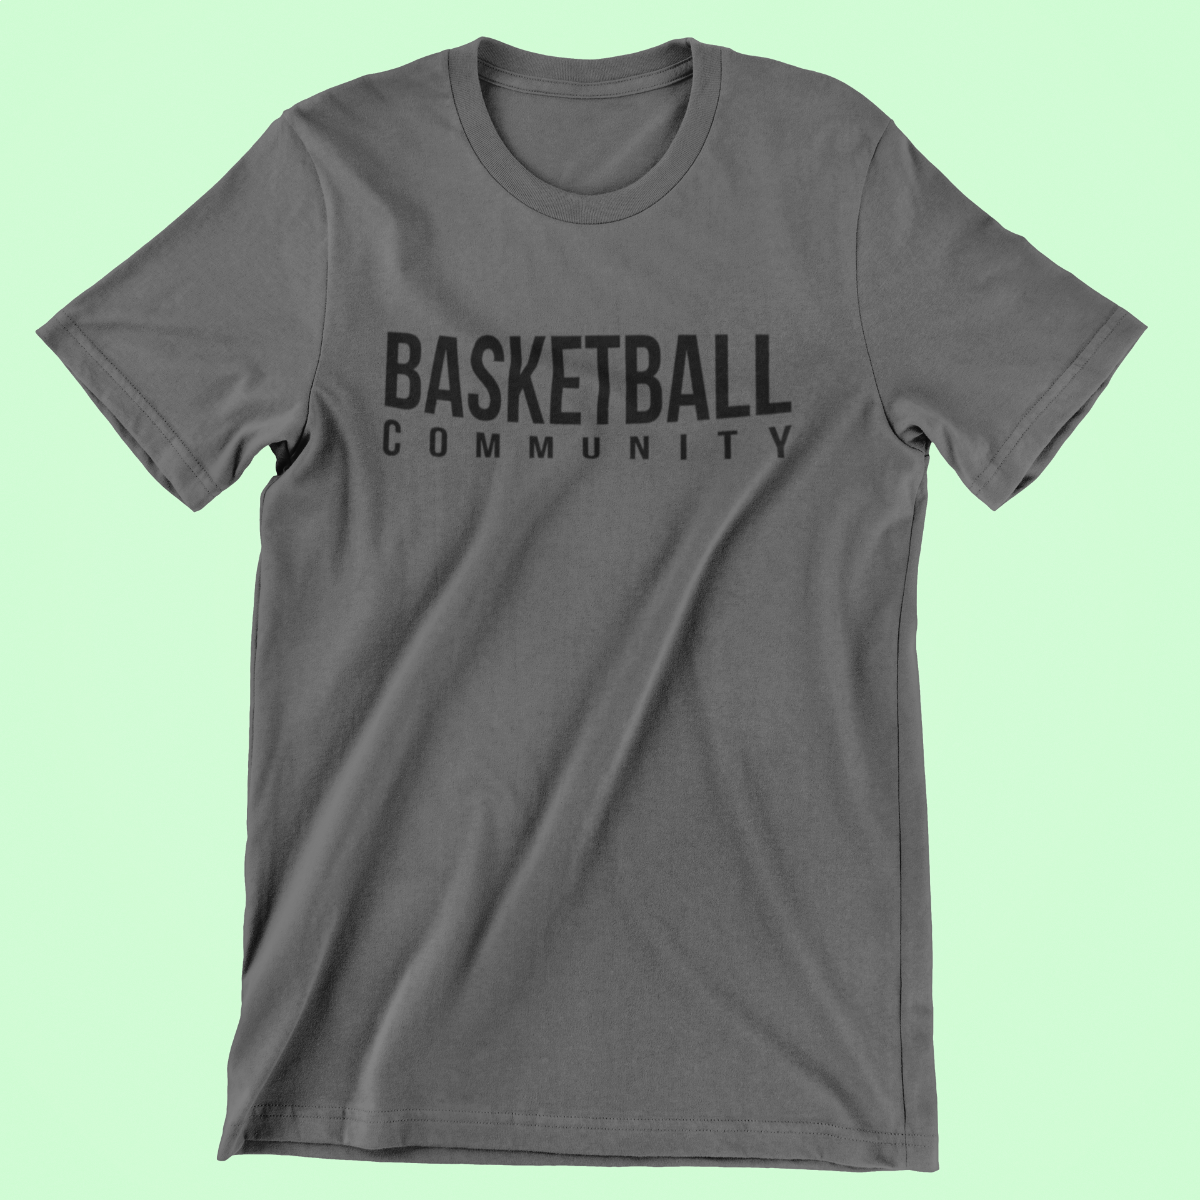 Basketball Community Tekst T-Shirt Wit